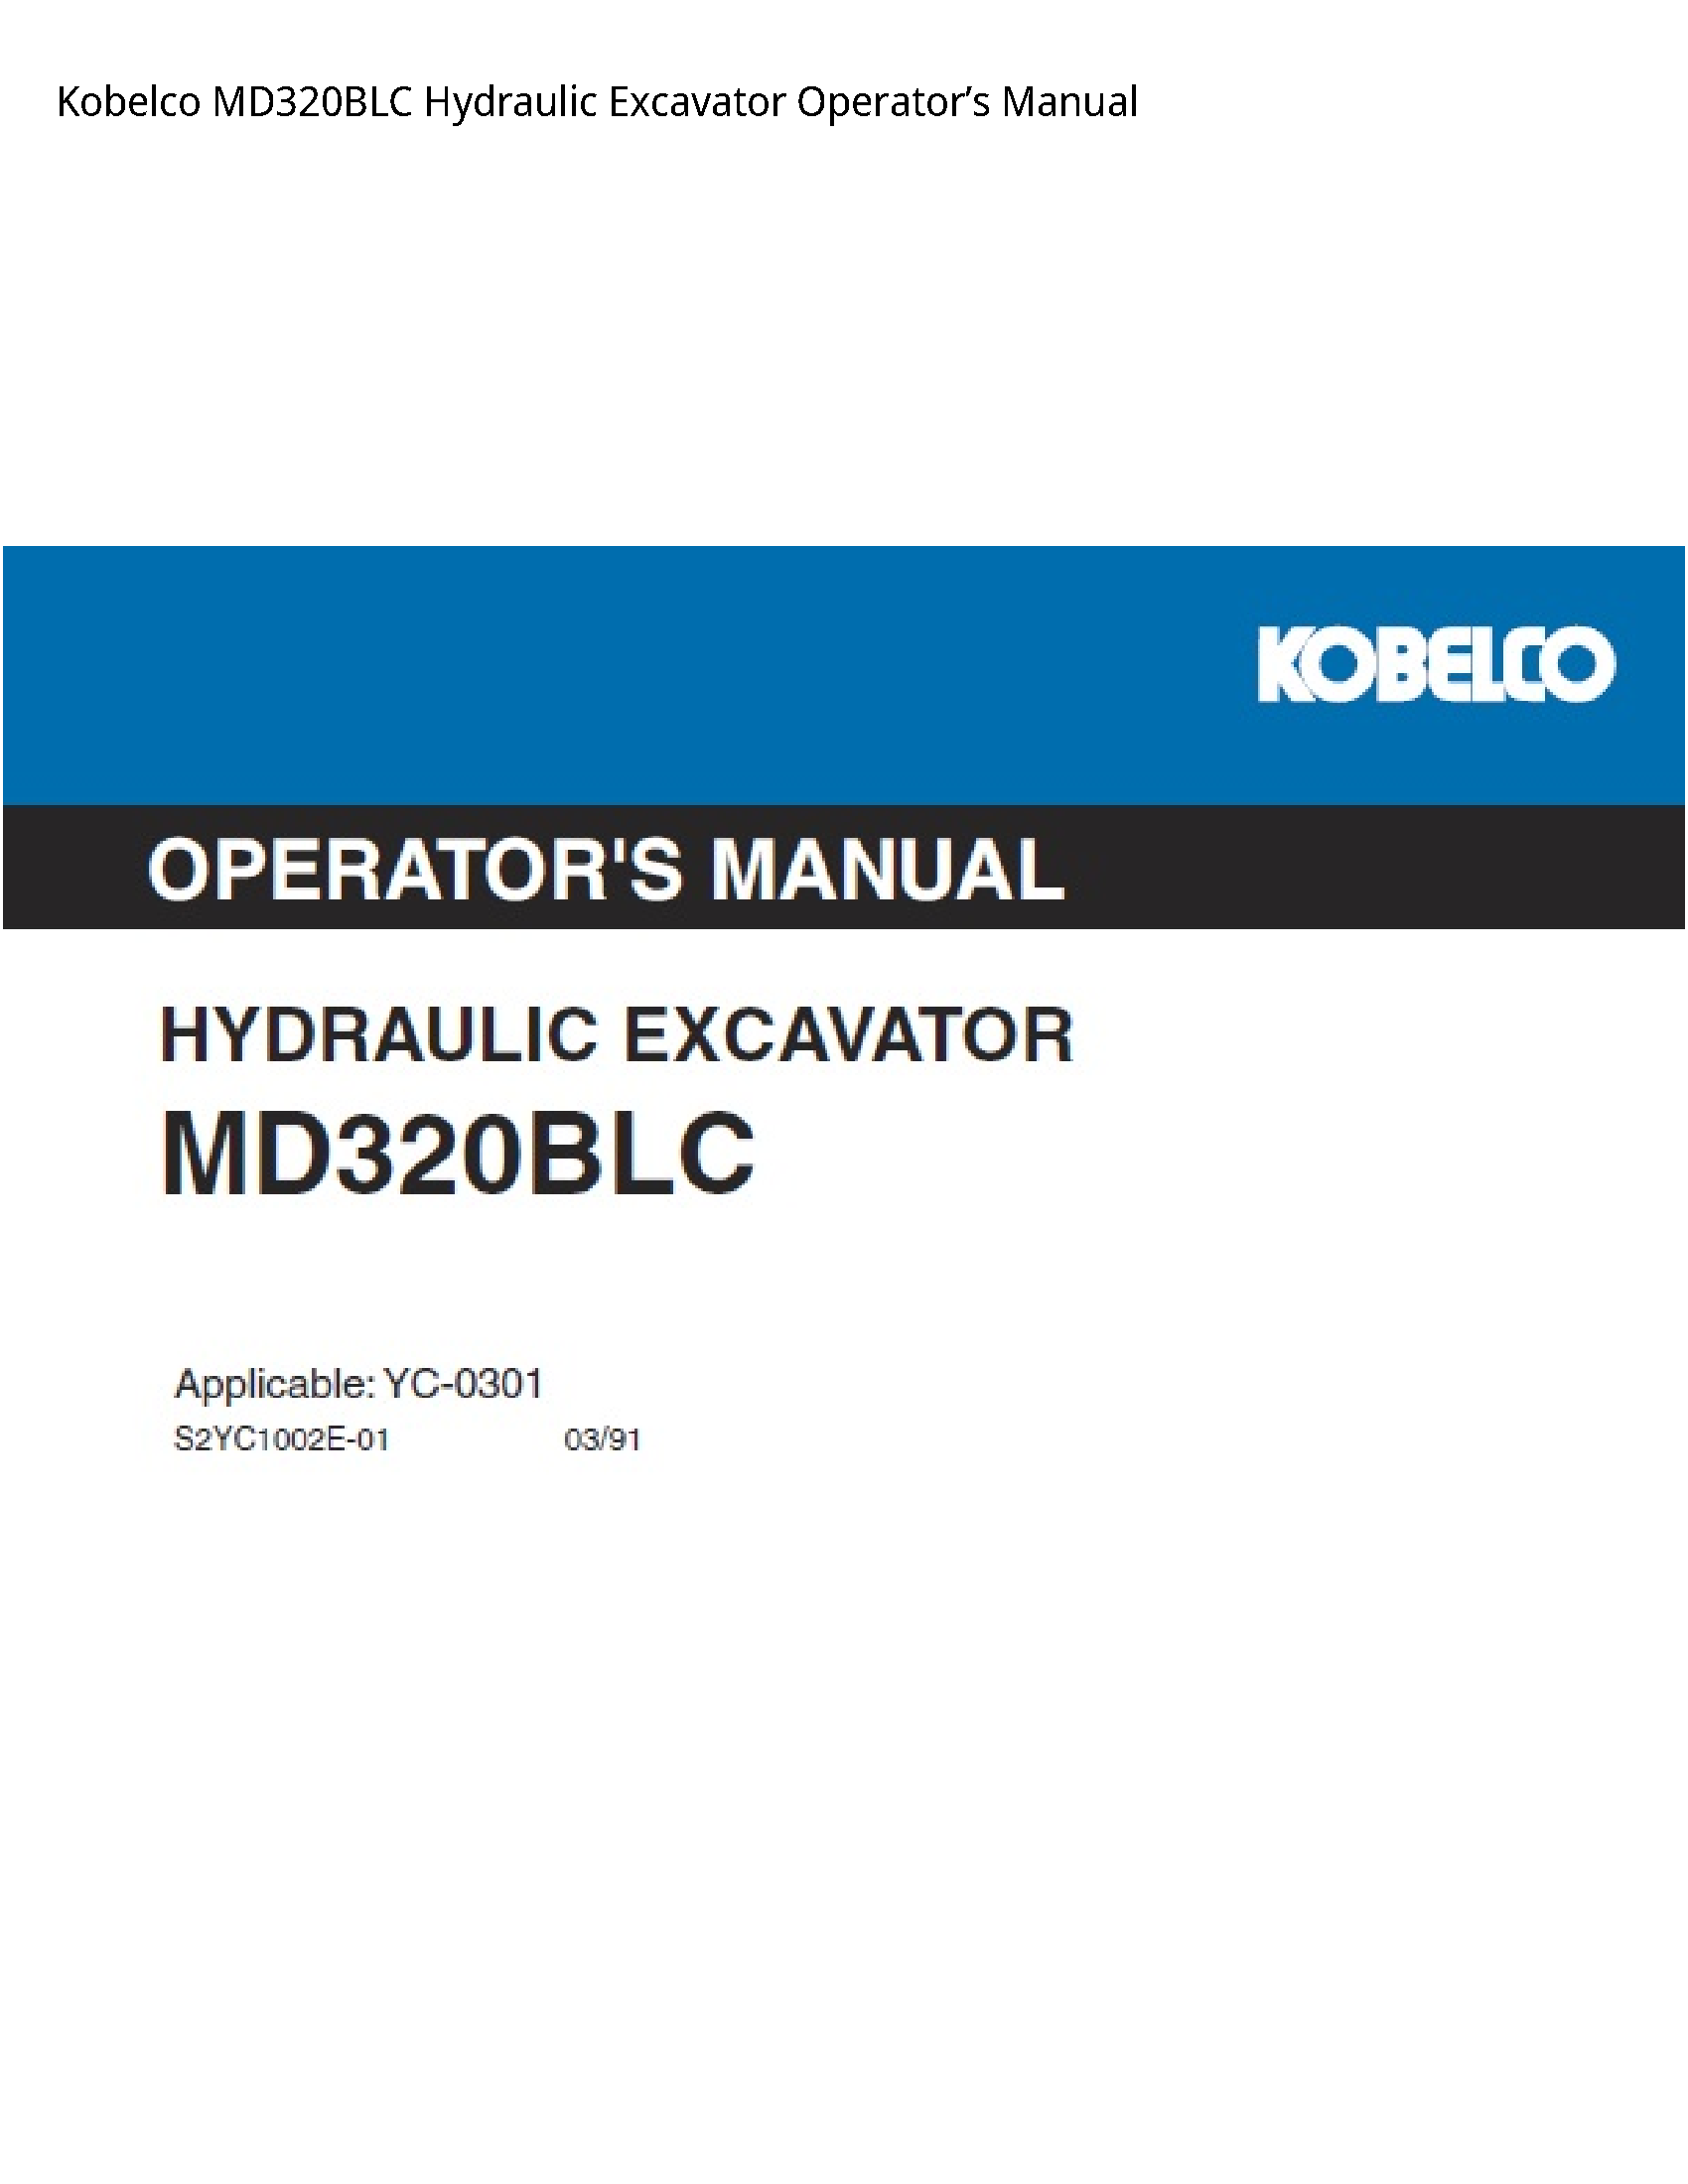 Kobelco MD320BLC Hydraulic Excavator Operator’s manual